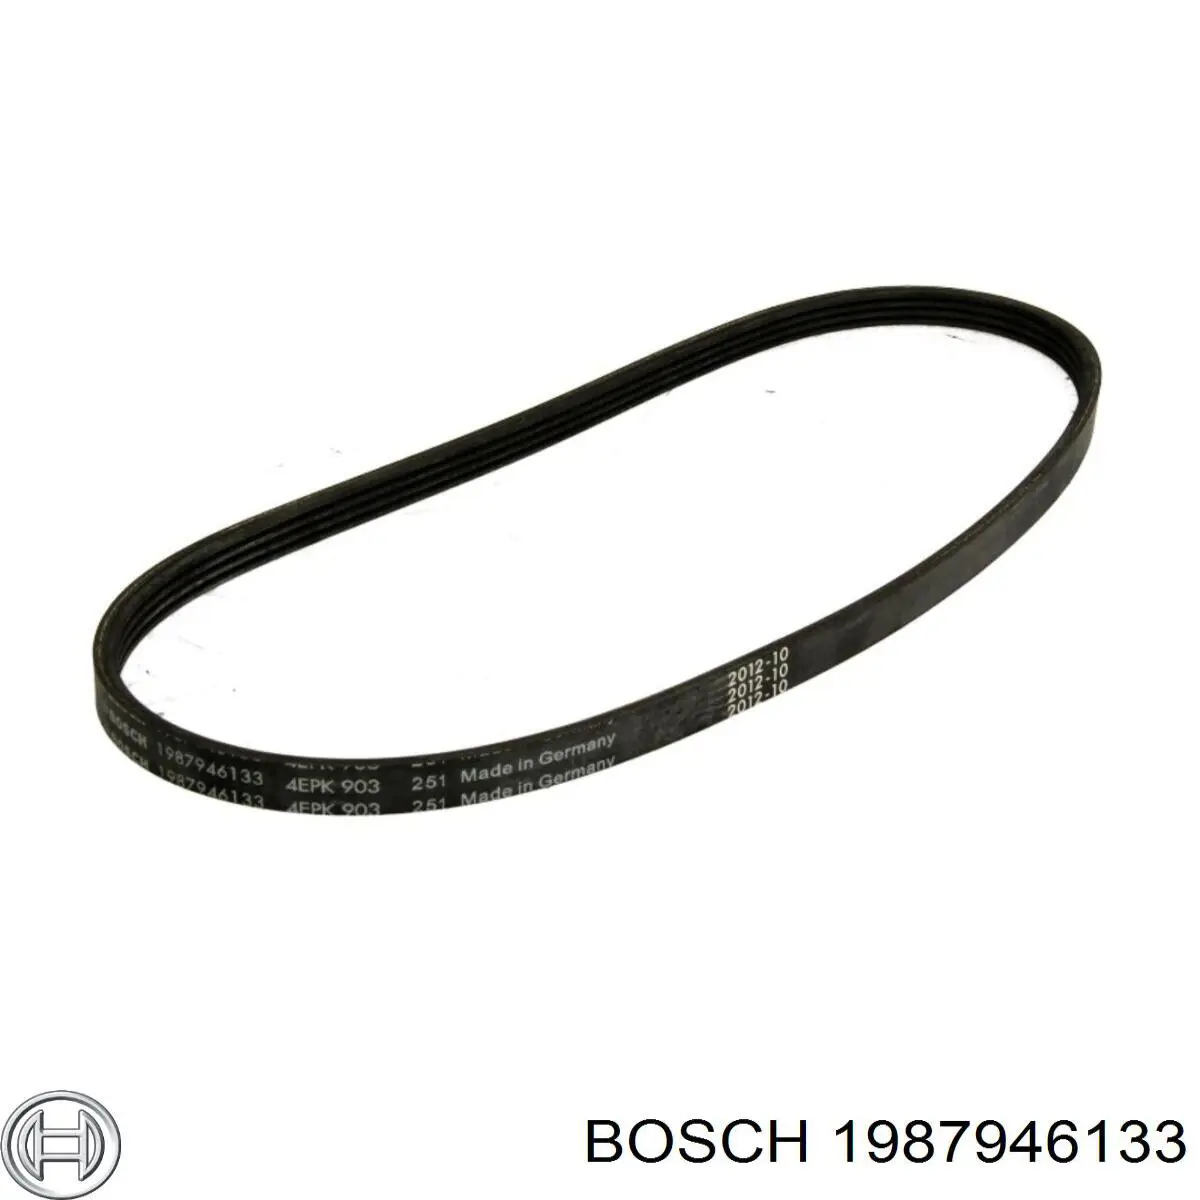 1987946133 Bosch correa trapezoidal